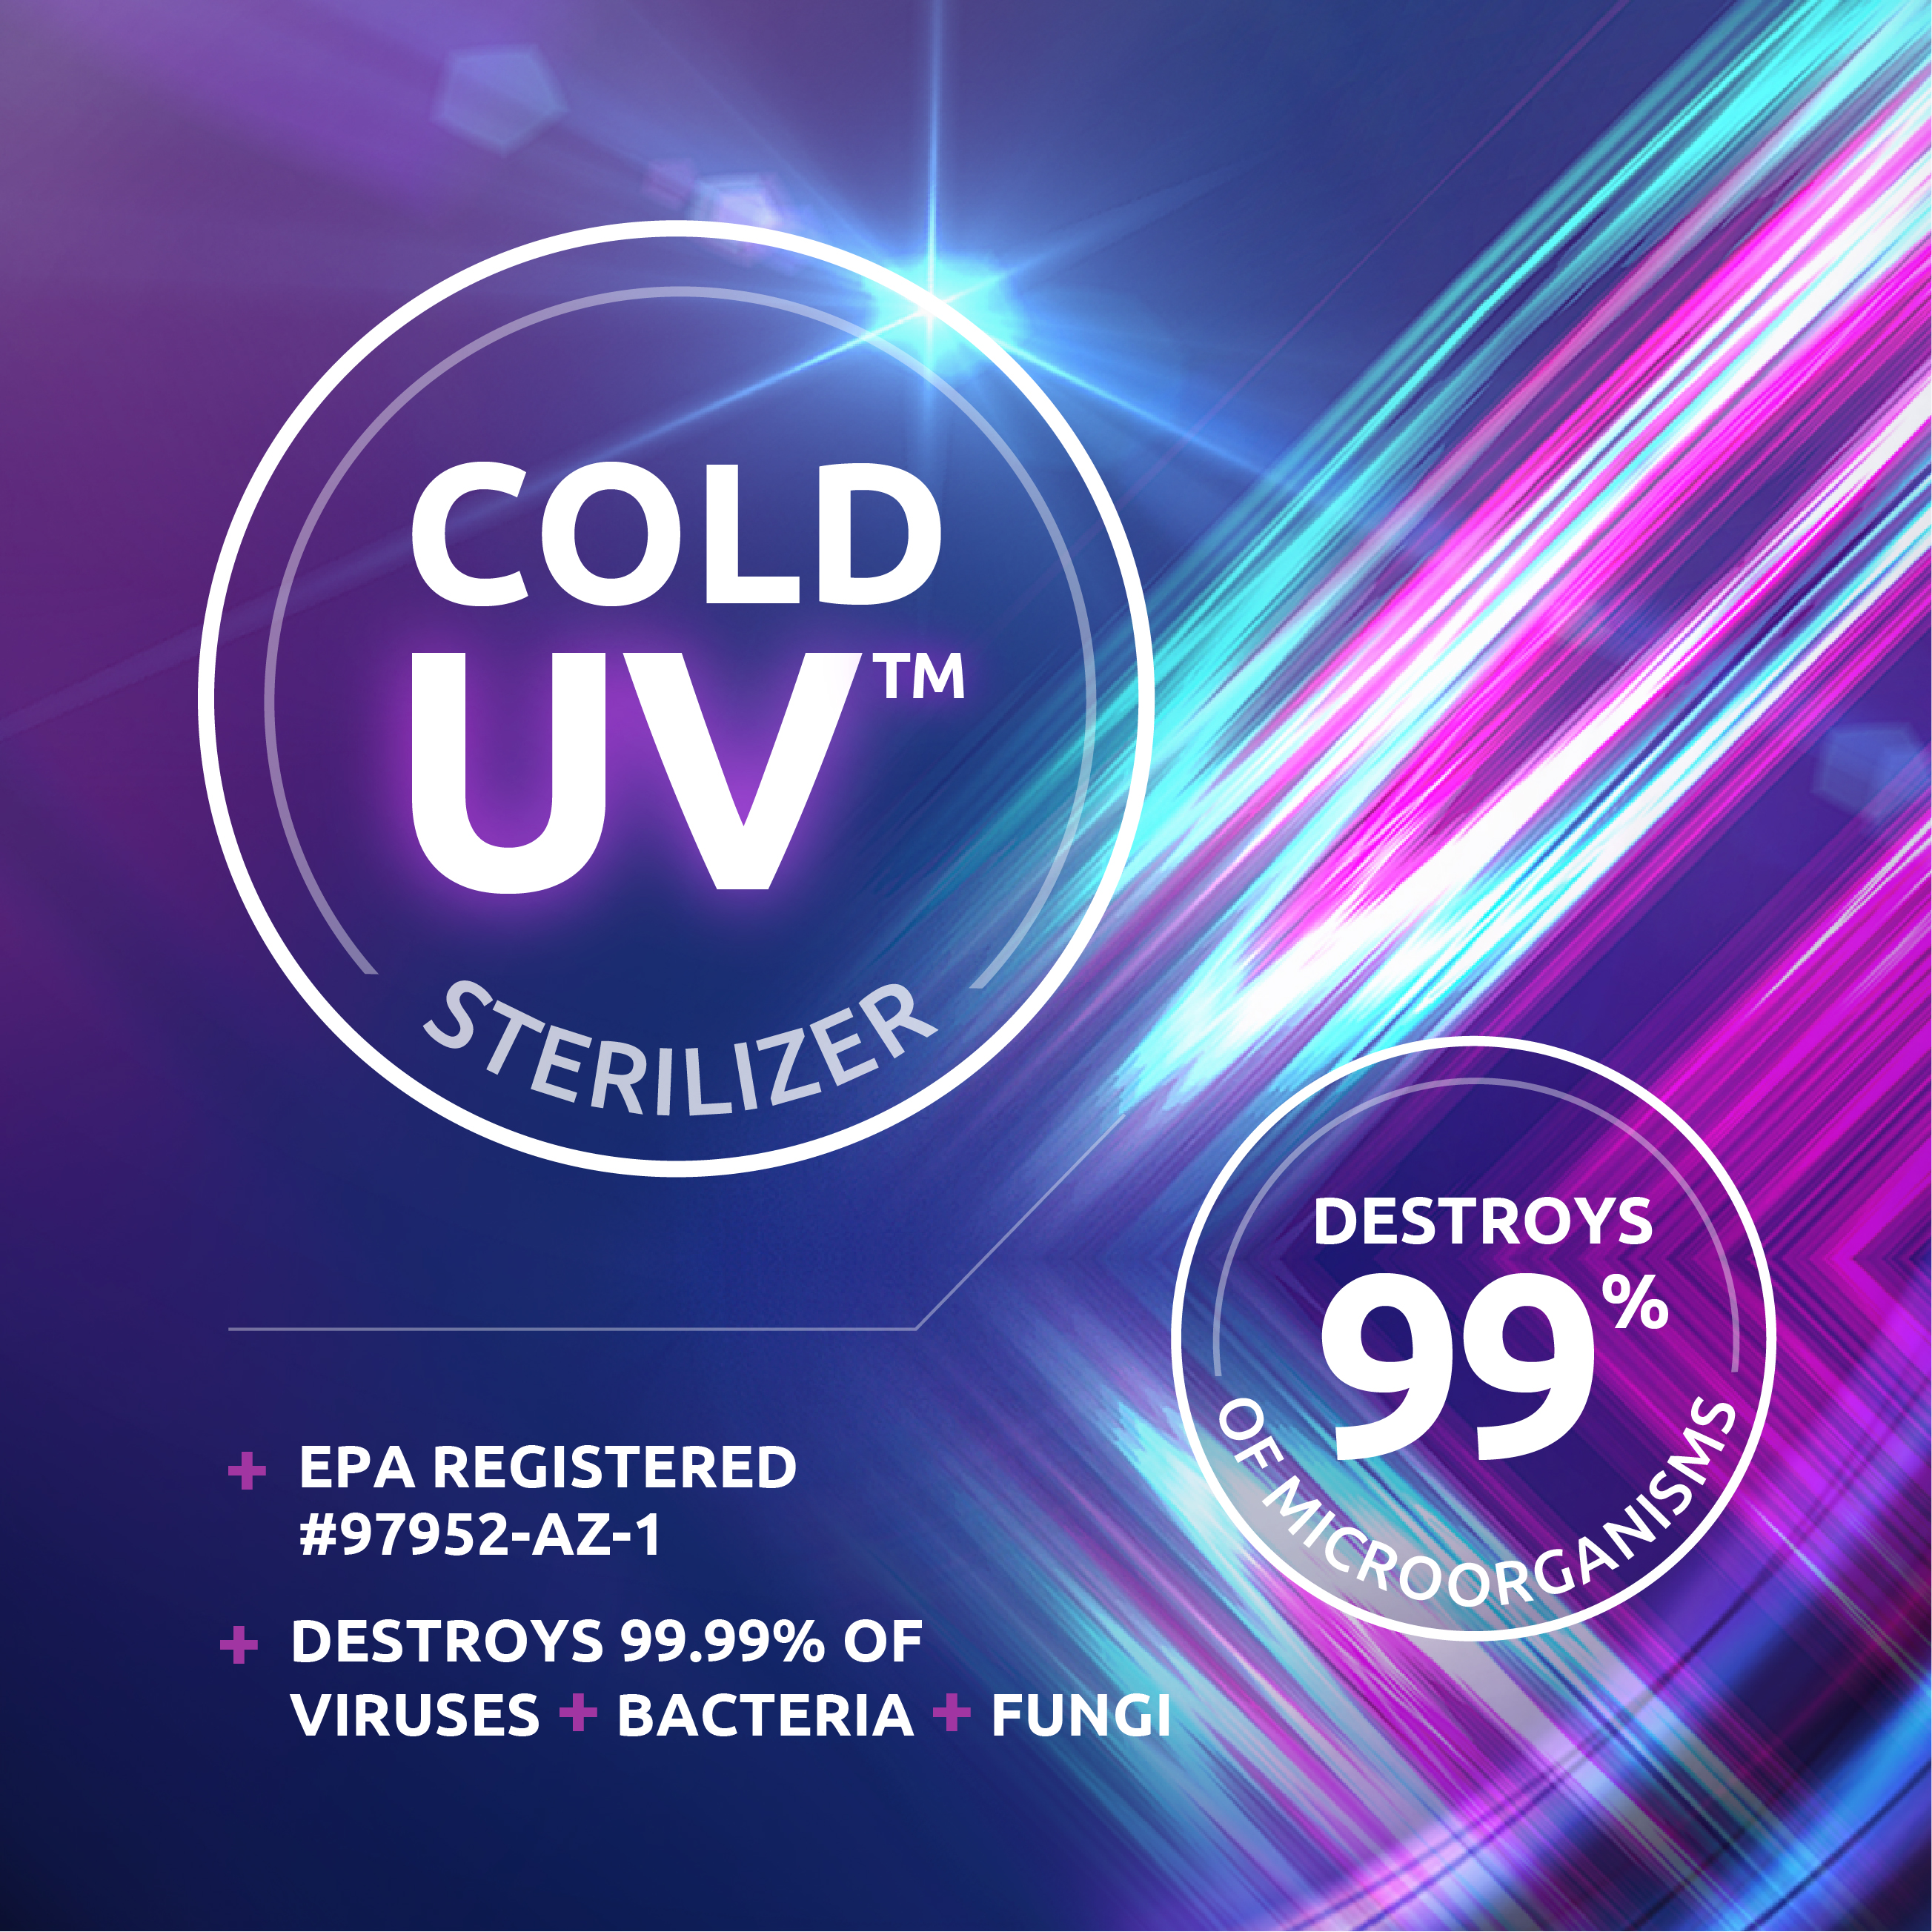 Safe UV Sterilizer